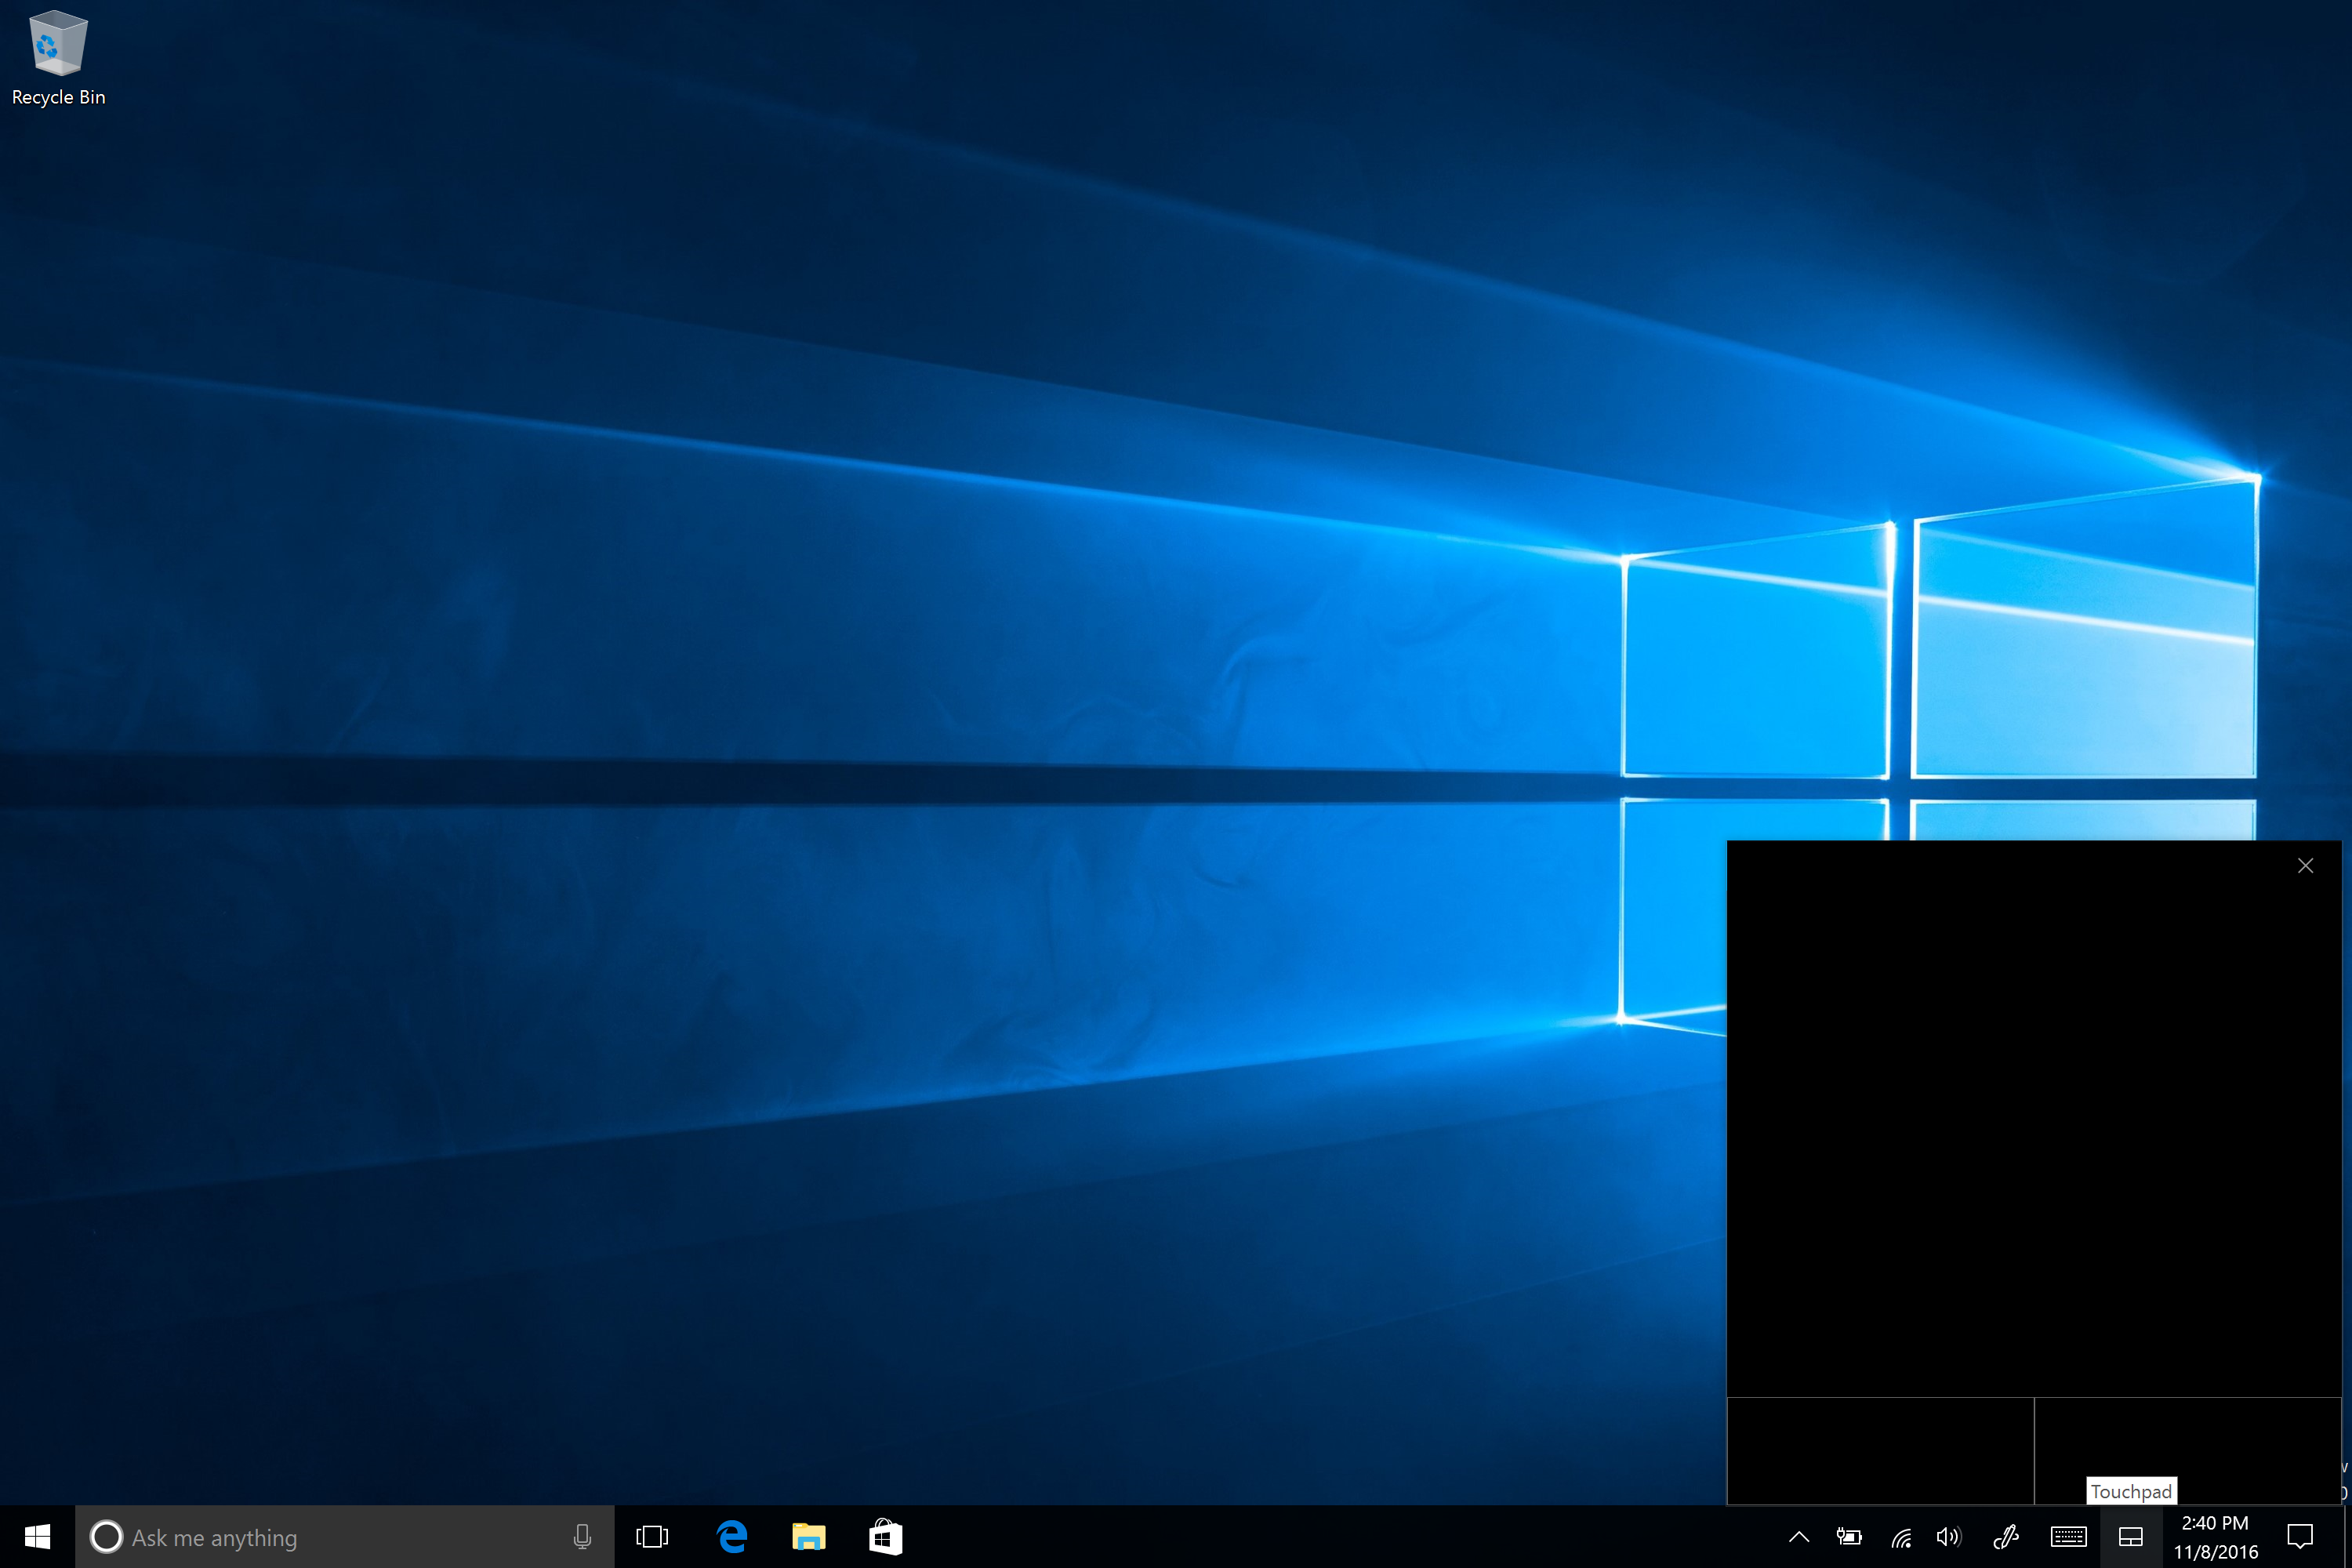 Windows 10's new virtual track pad